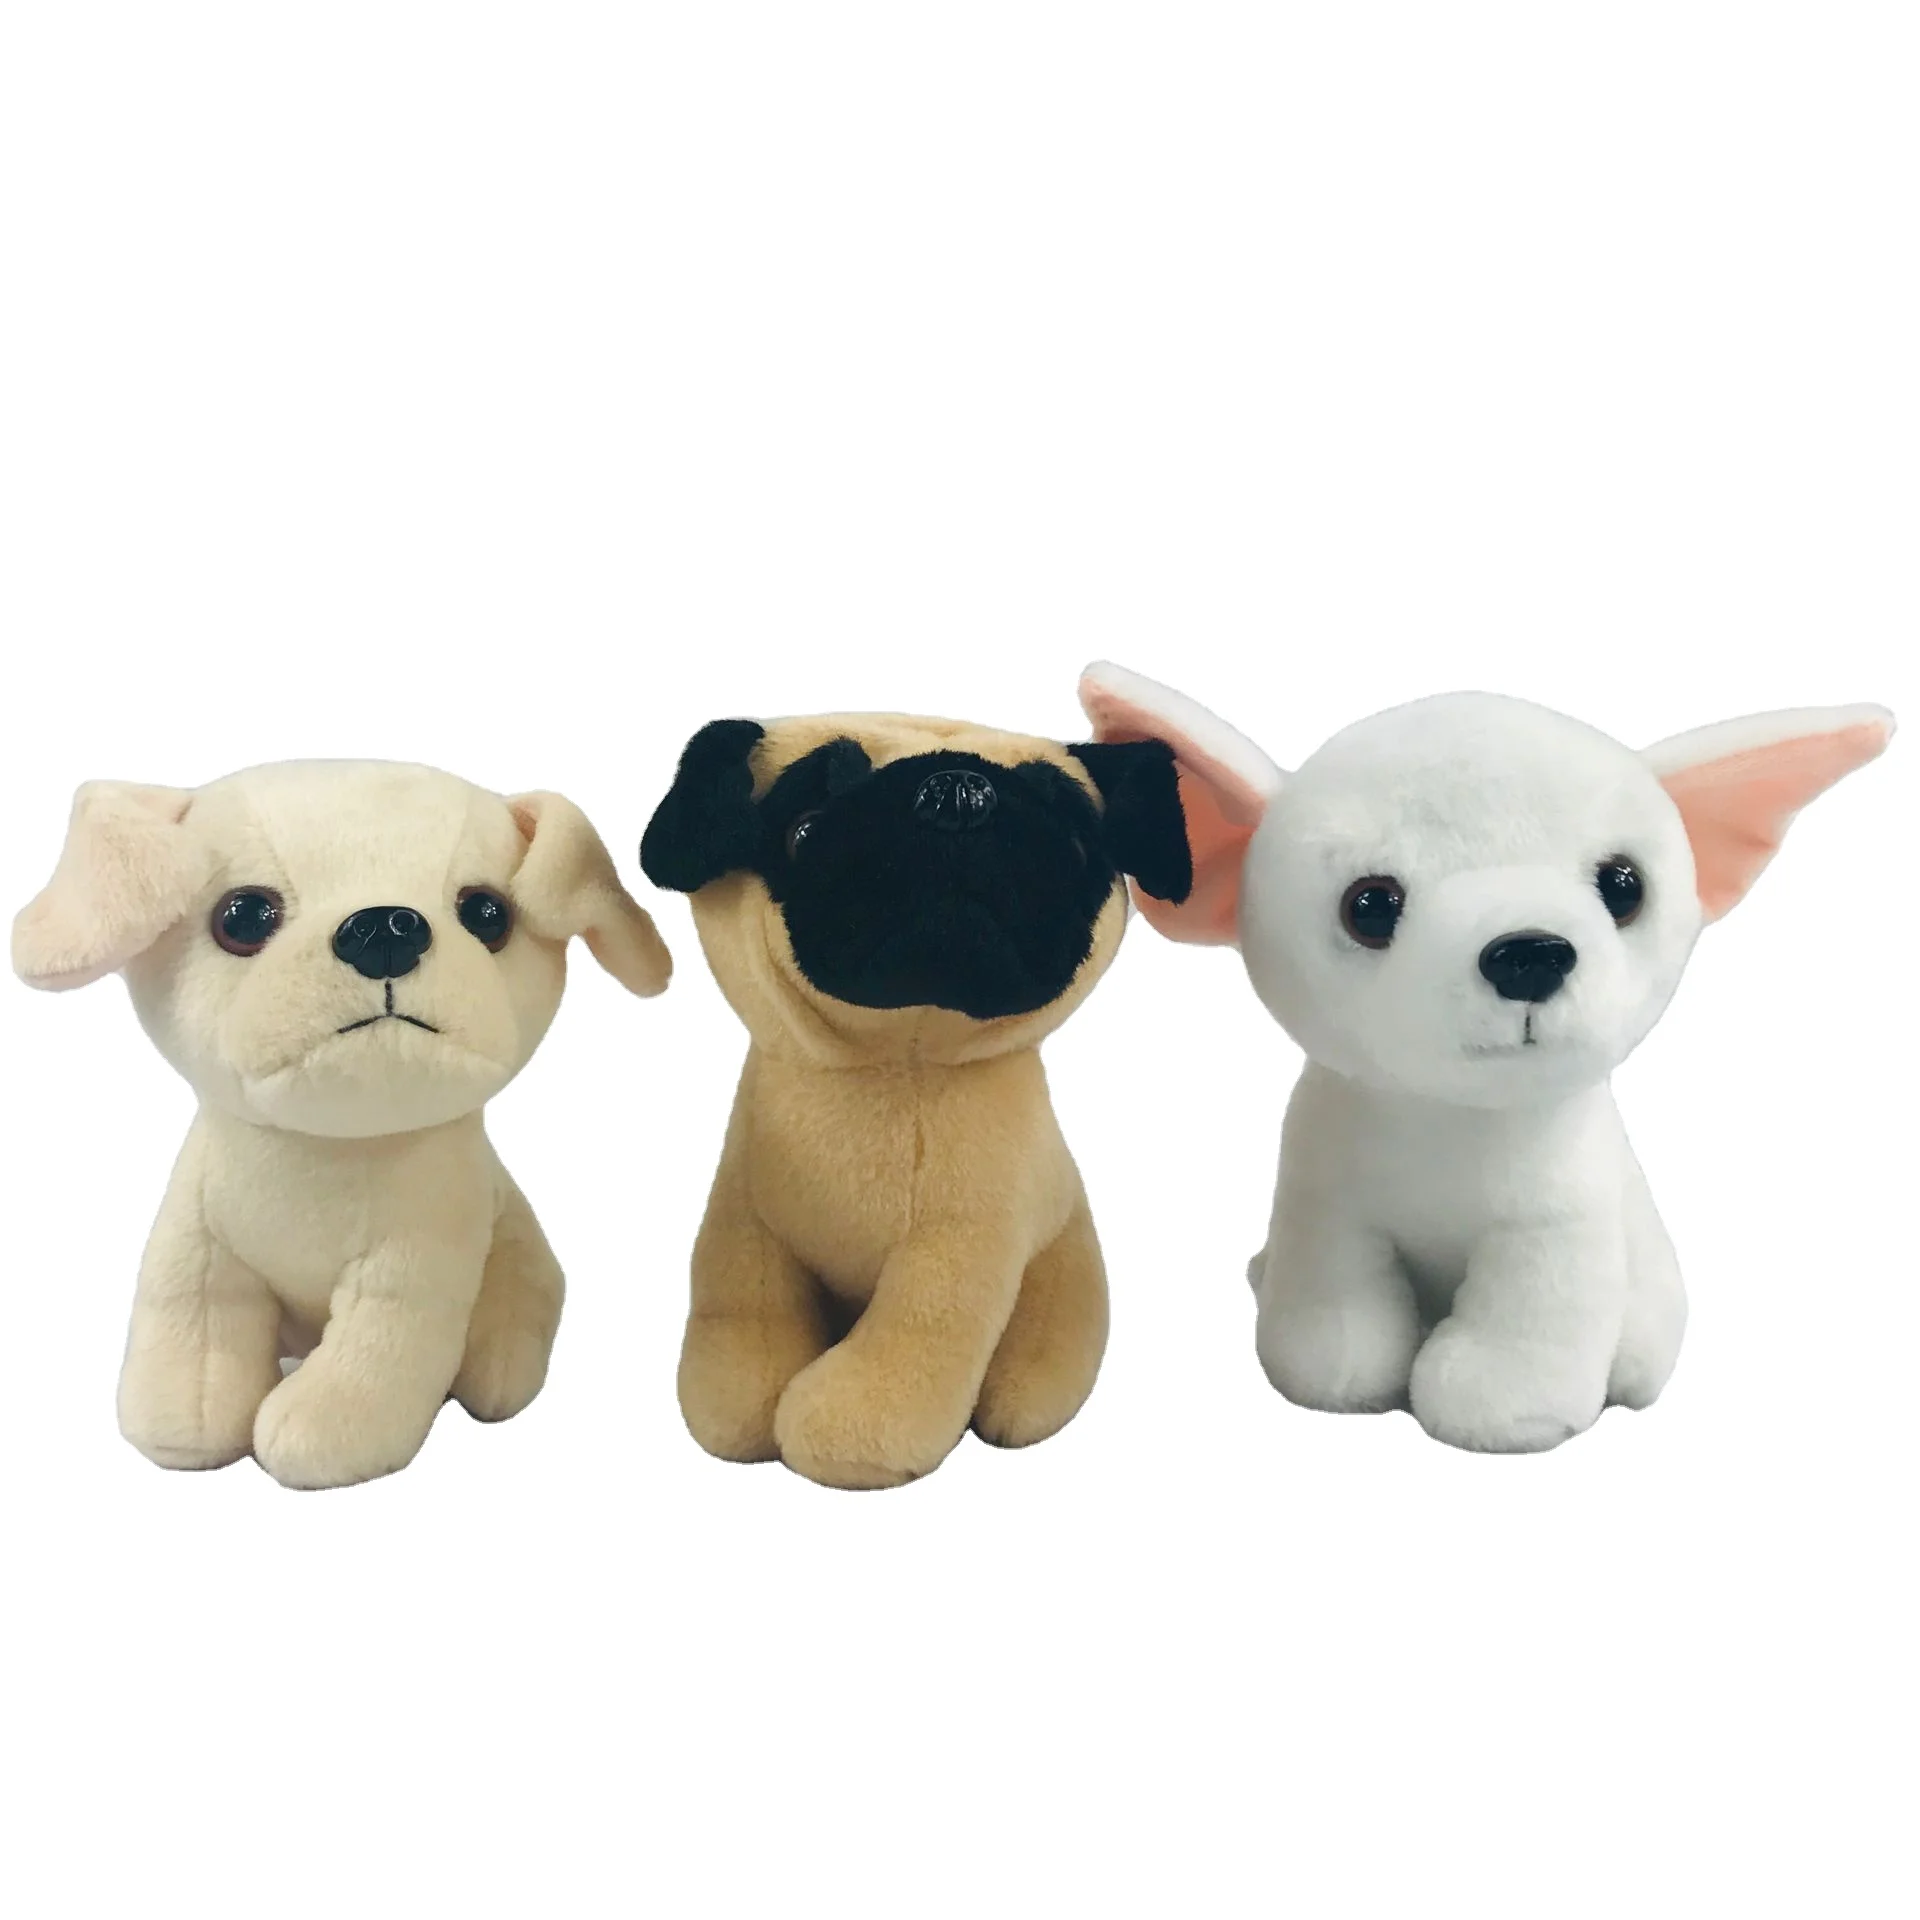 Pluche Mini Gevulde Chihuahua Pug Honden En Puppies Voor Verkoop - Pug Hond,Puppies,Puppy Hond Product on Alibaba.com